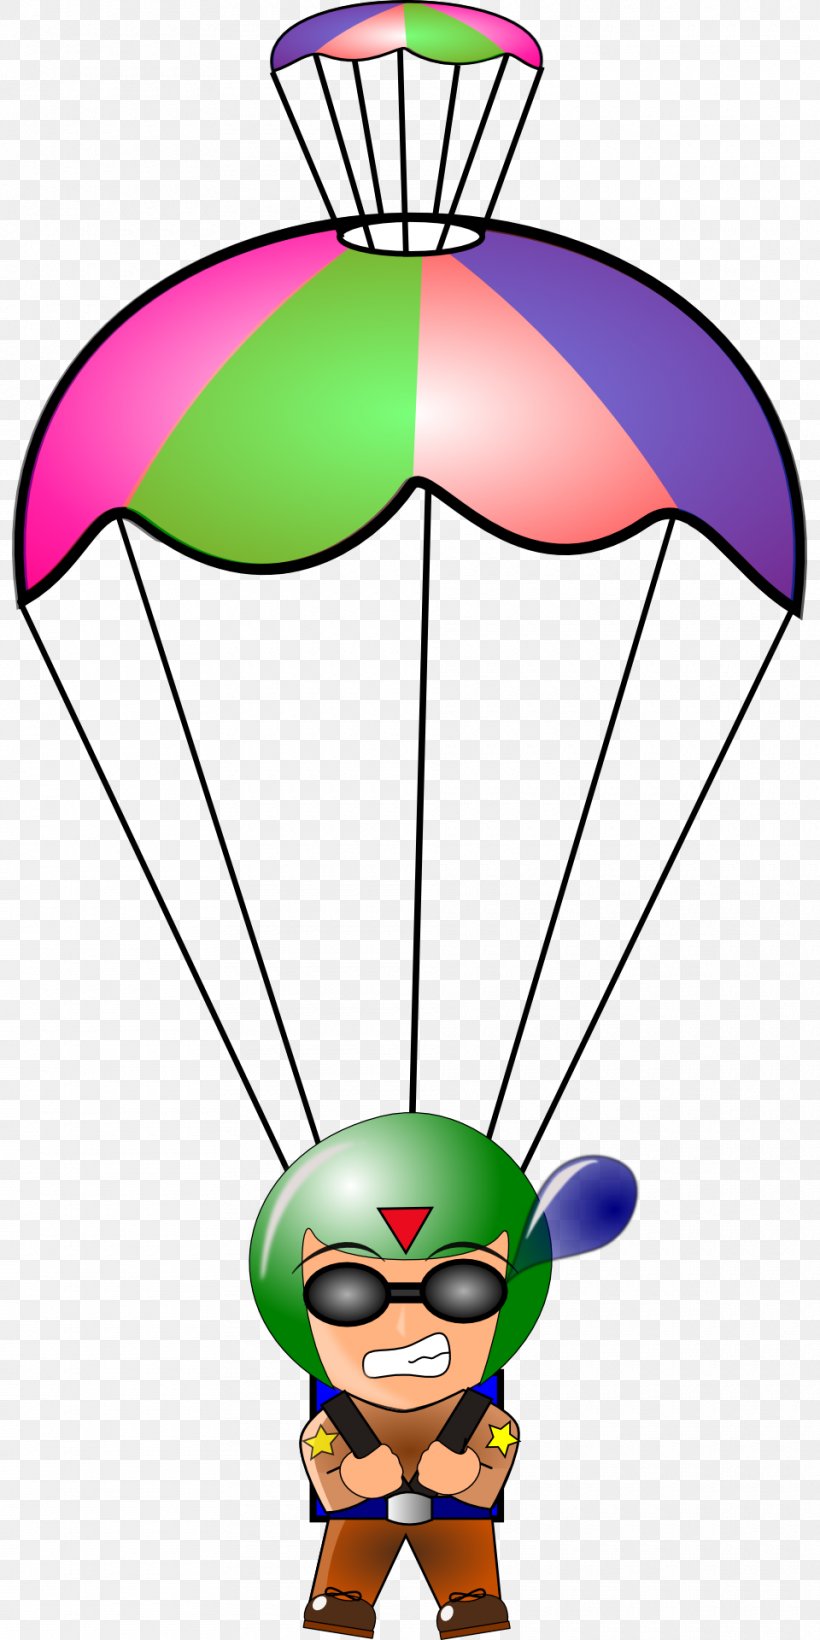 Parachute Parachuting Clip Art, PNG, 960x1920px, Parachute, Free Content, Parachute Landing Fall, Parachuting, Royaltyfree Download Free